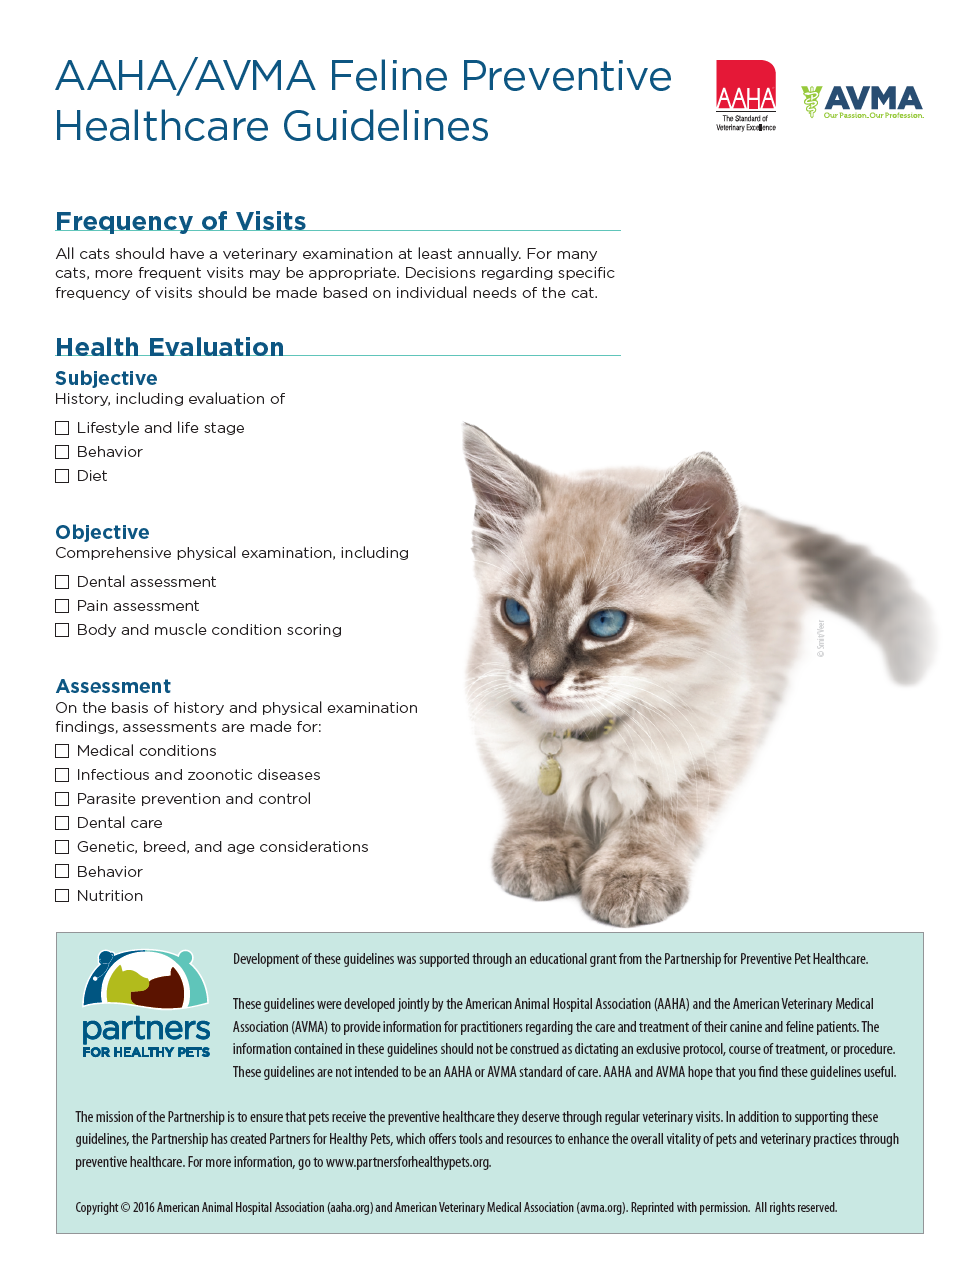 Link to Feline Preventive Care Guidelines